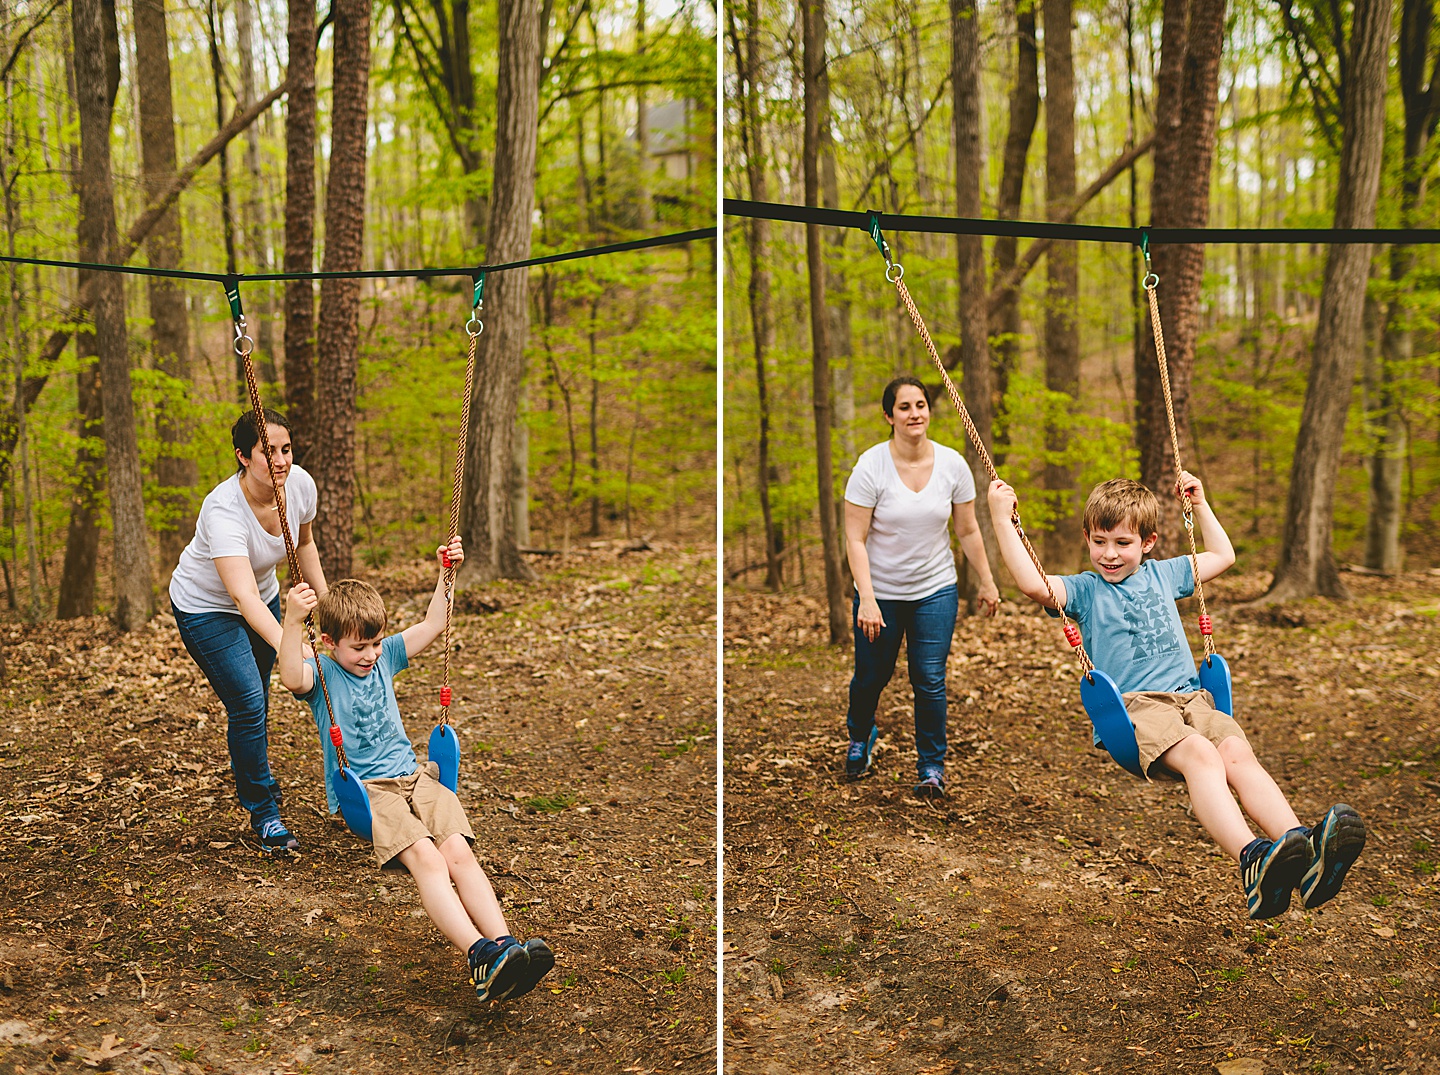 Mom pushing son on a swing in backyard